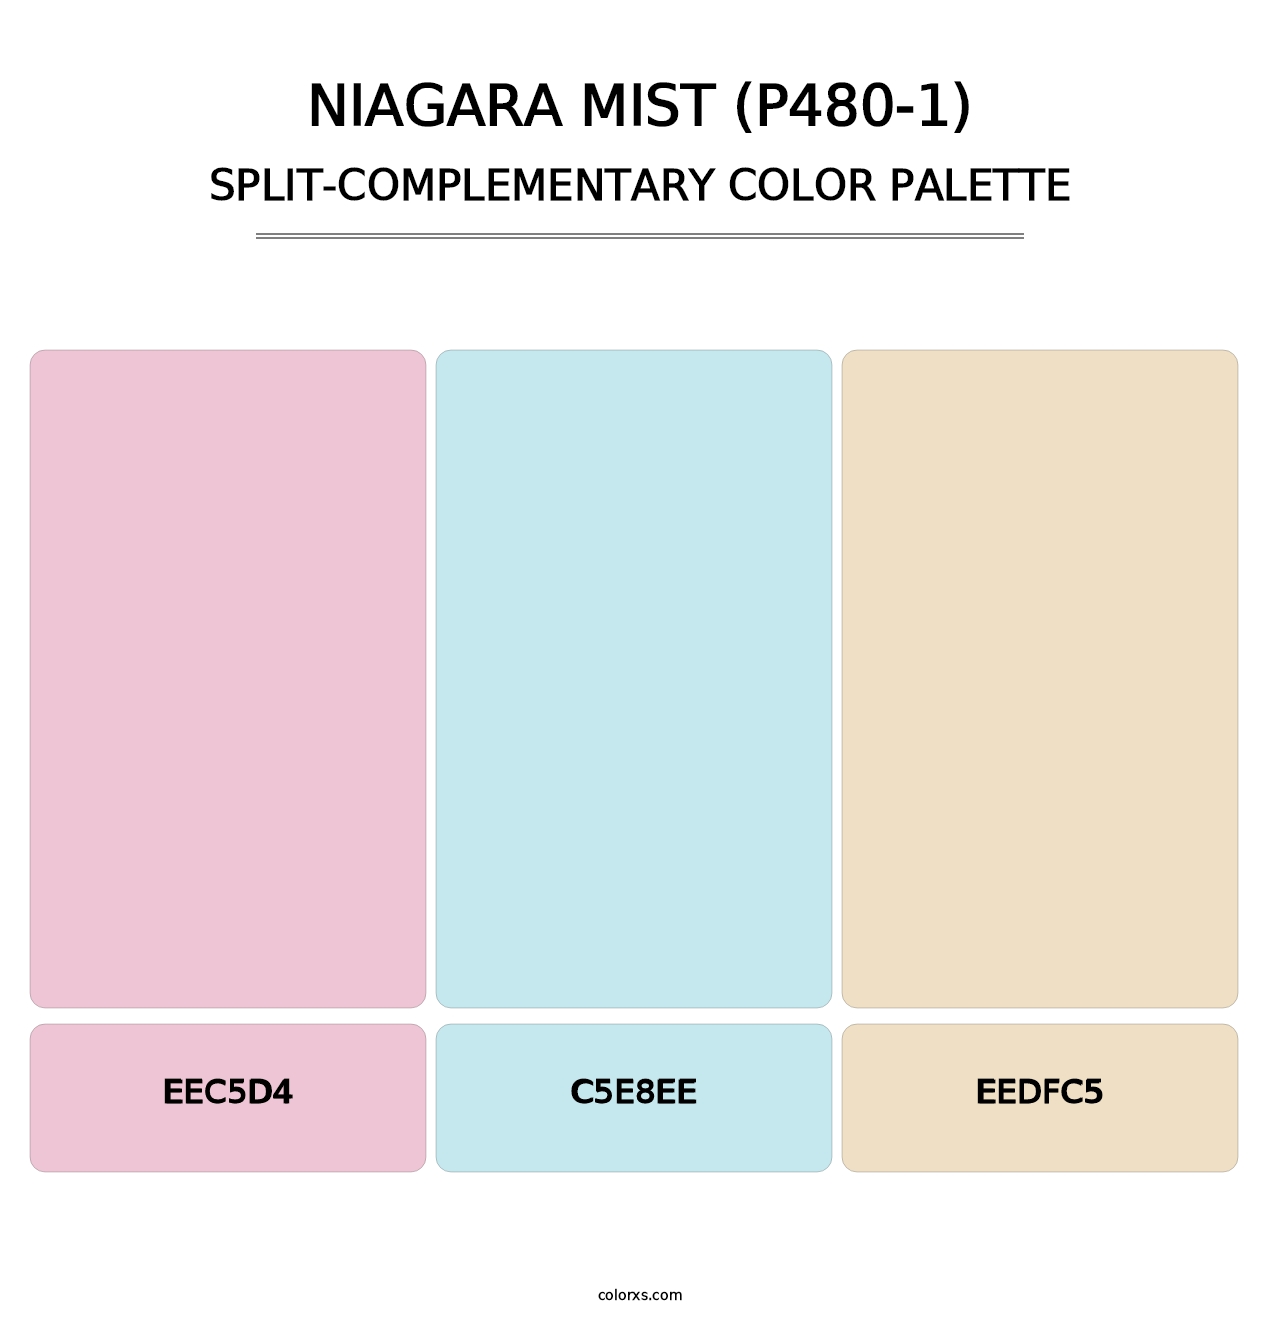 Niagara Mist (P480-1) - Split-Complementary Color Palette